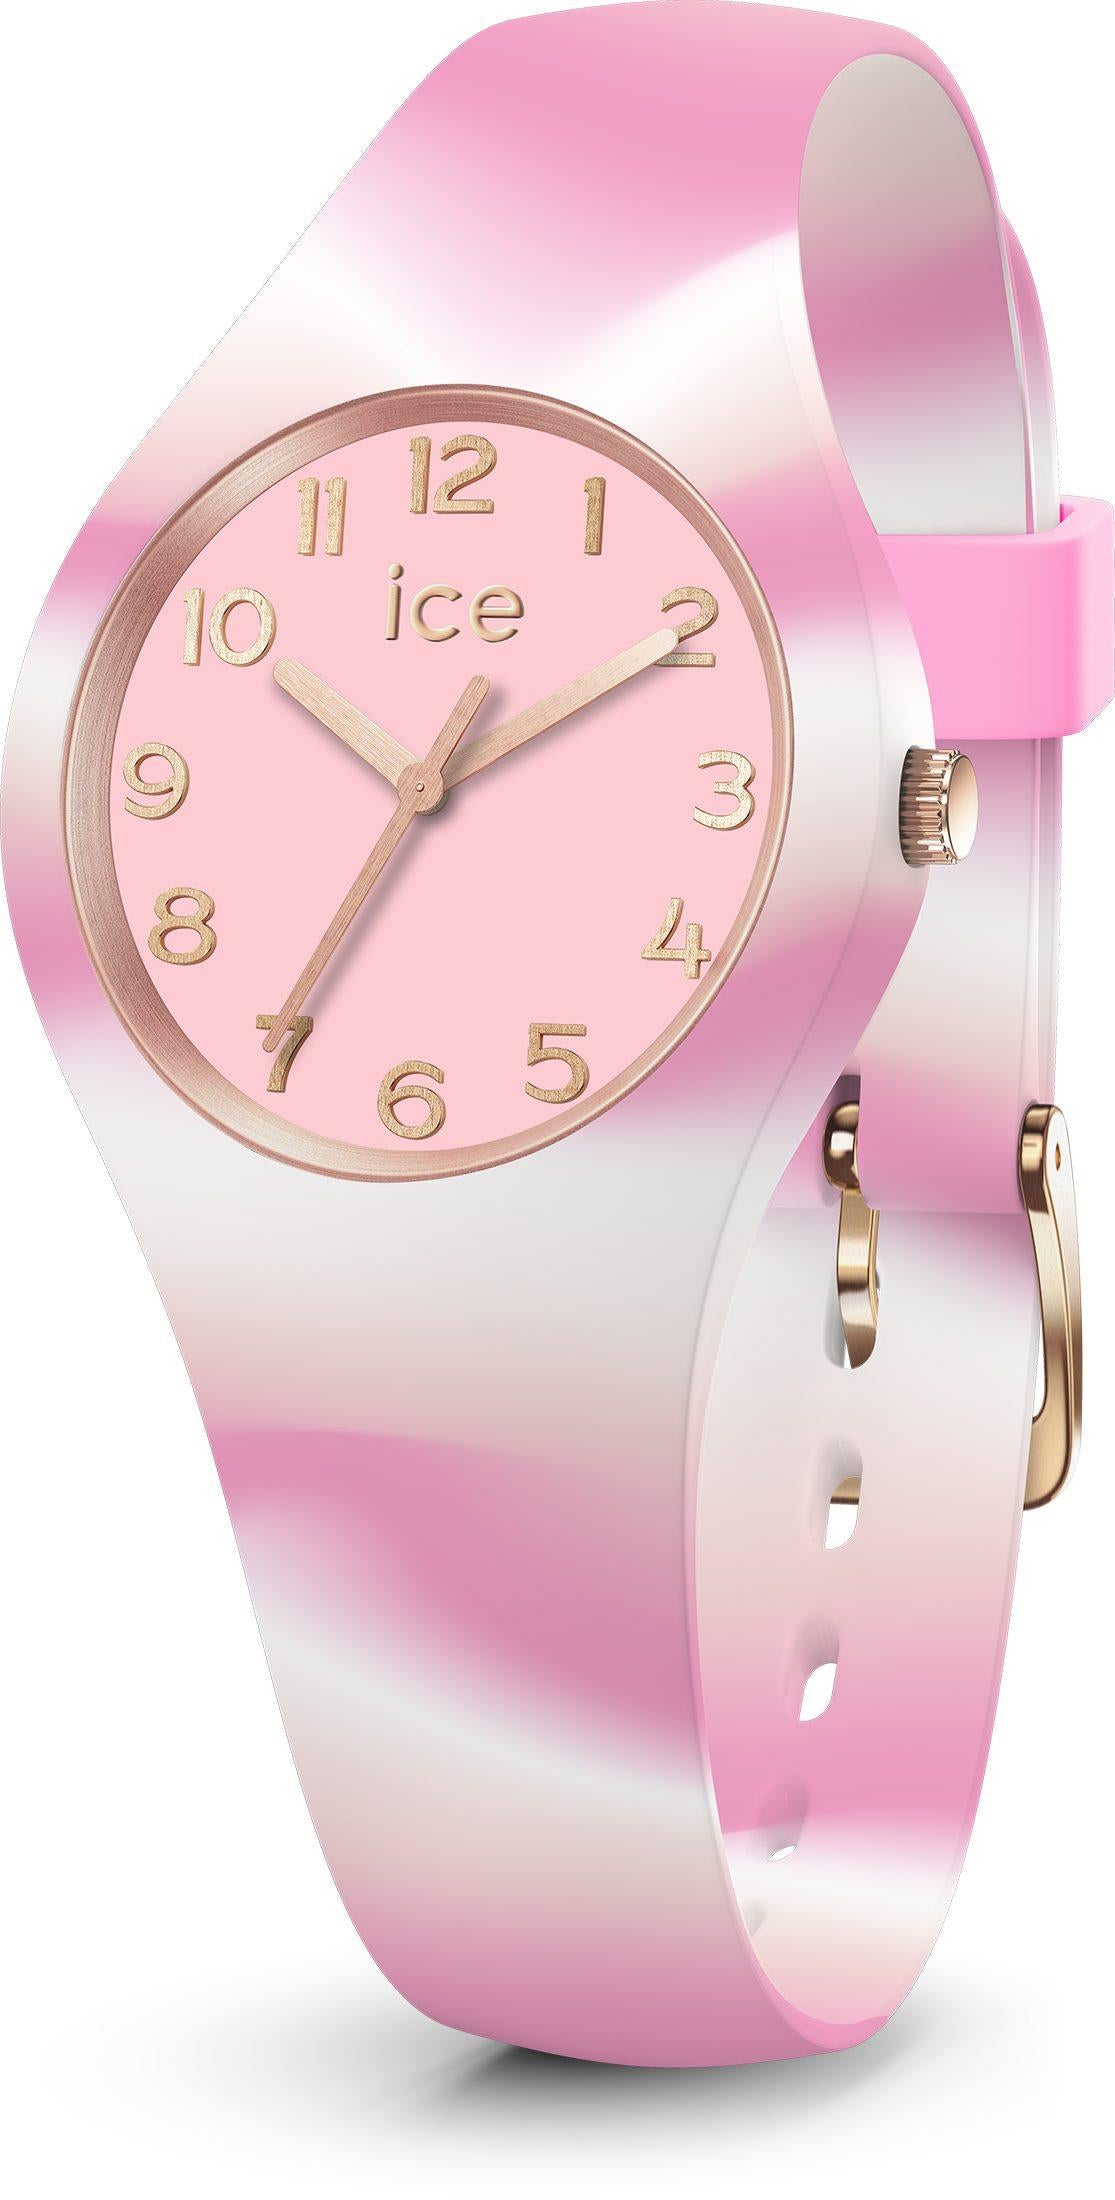 Ice watch Armbanuhr 021011 Silikonband